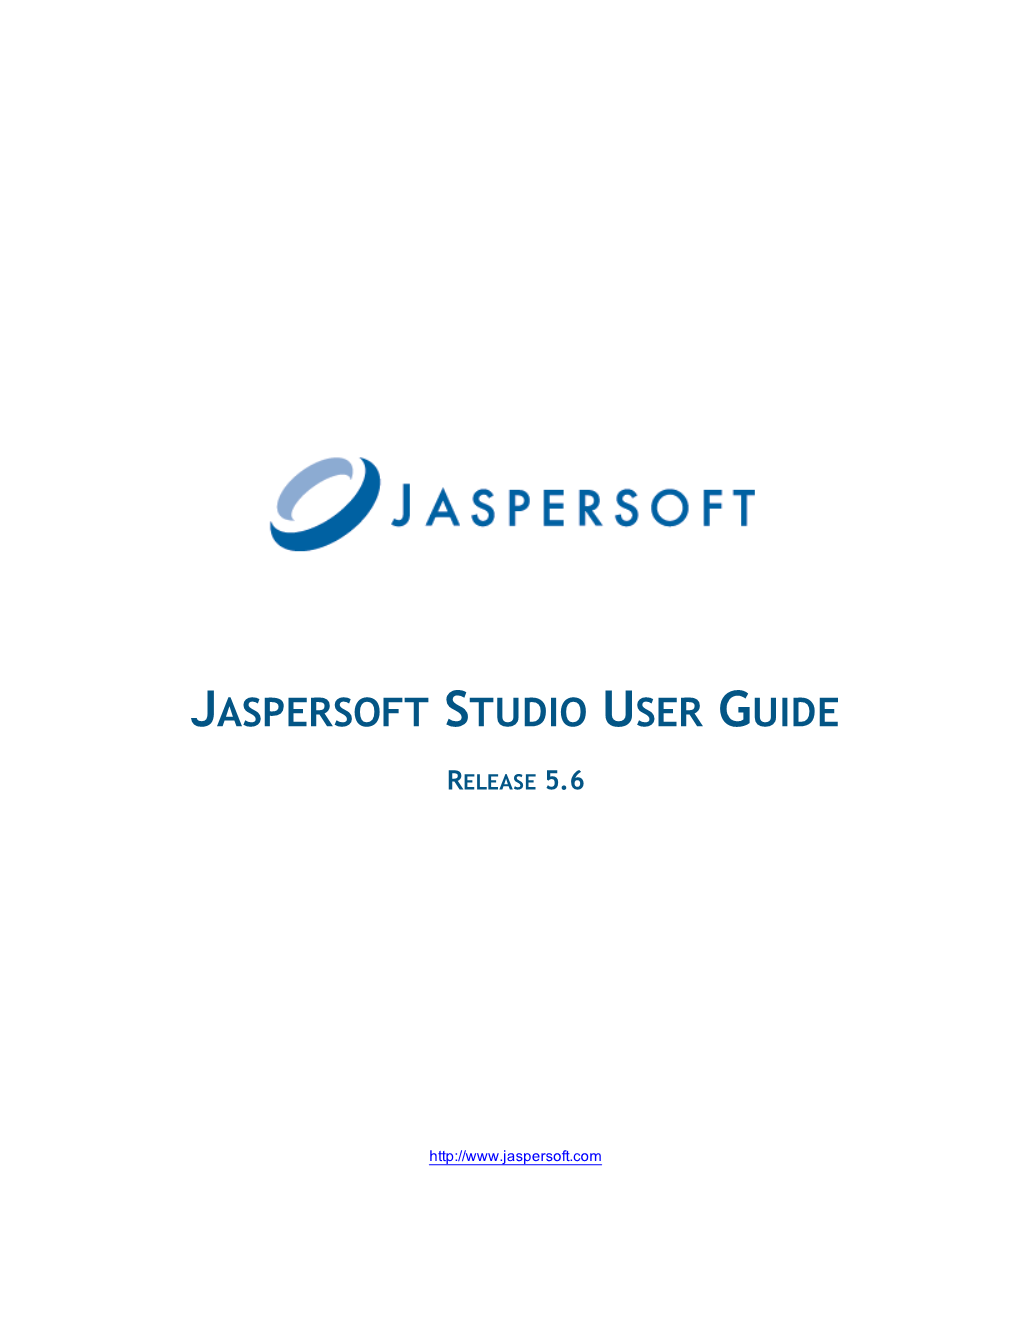 Jaspersoft Studio User Guide